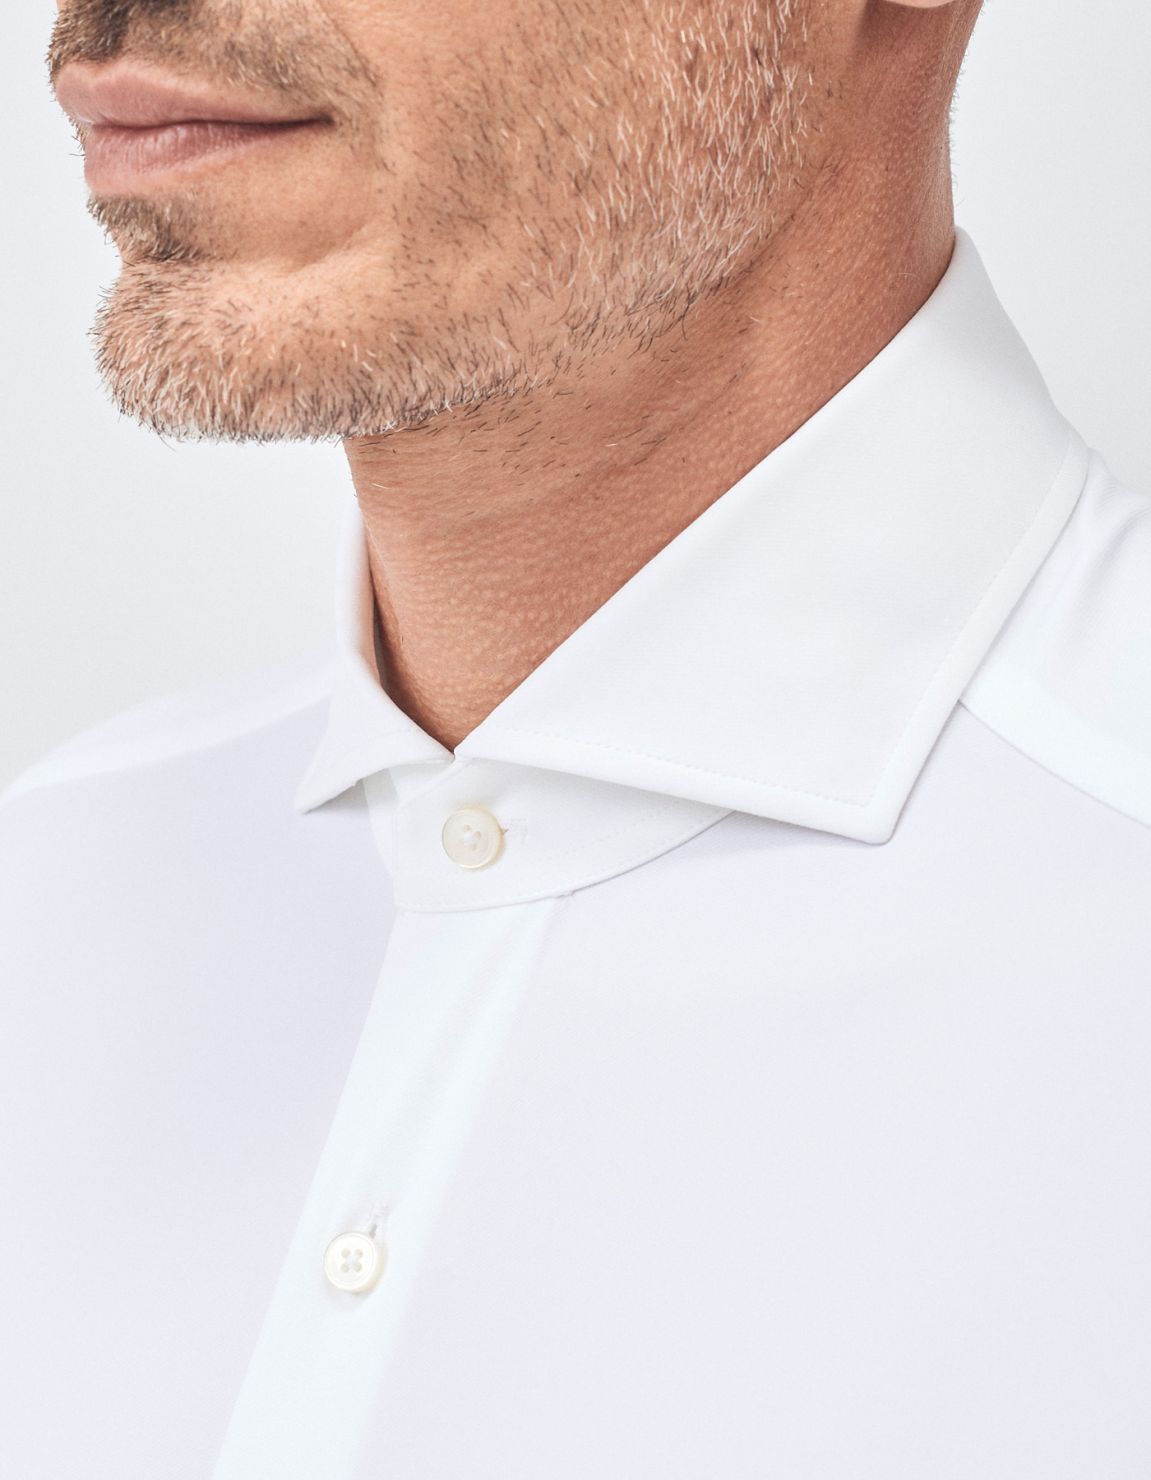 Shirt Collar cutaway White Twill Tailor Custom Fit 3